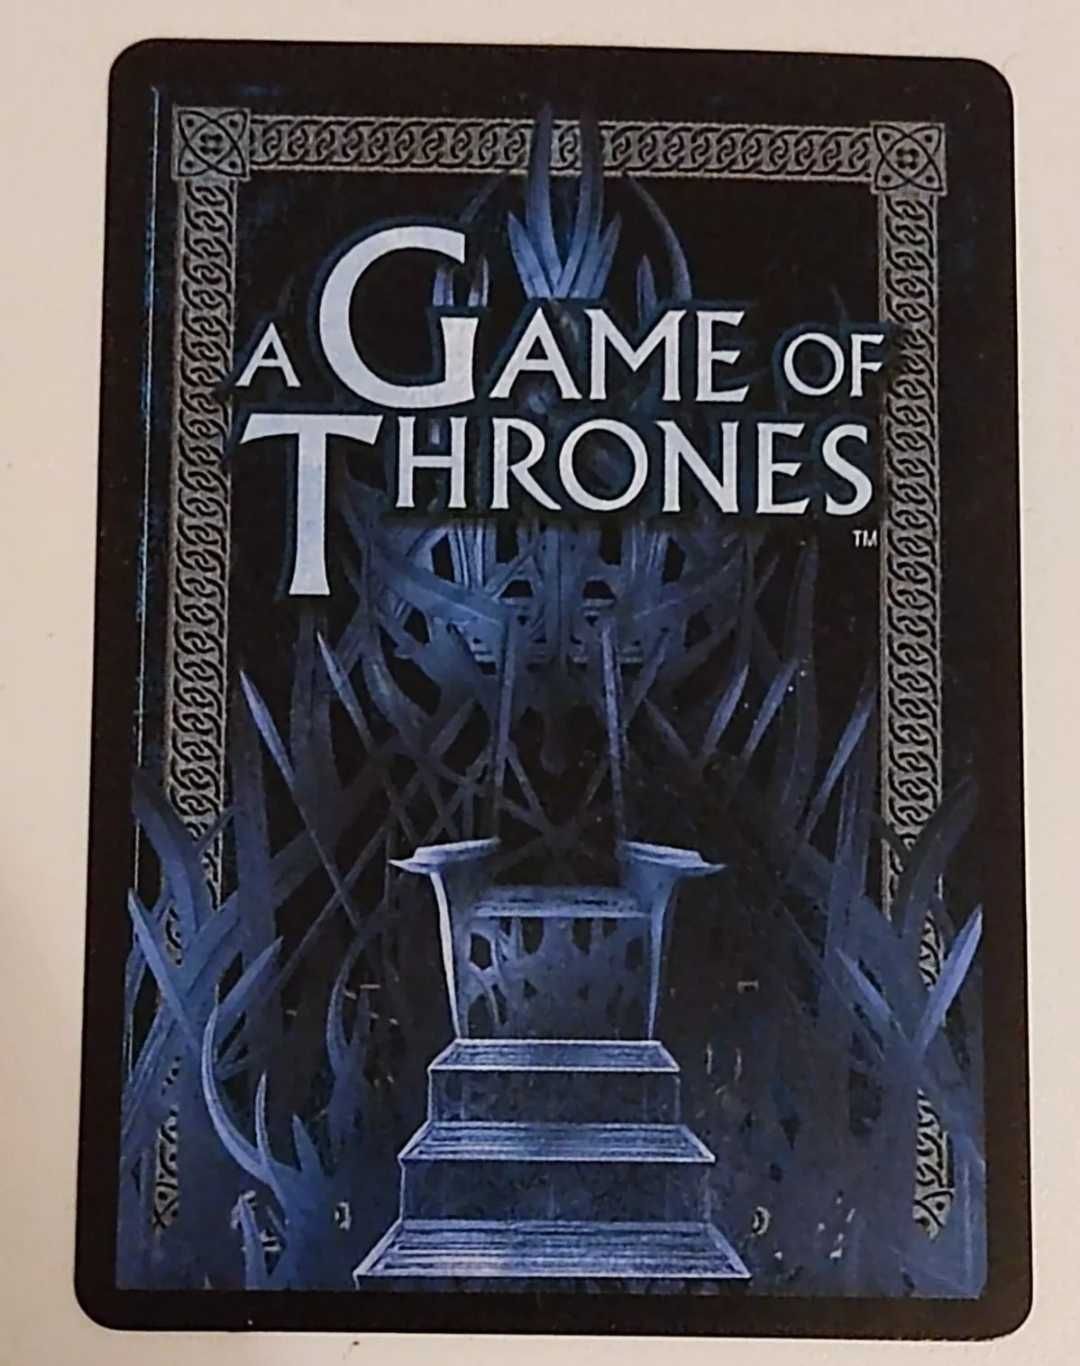 Ser Meryn Trant CCG - carte Semnata de IAN BEATTIE - Game of Thrones